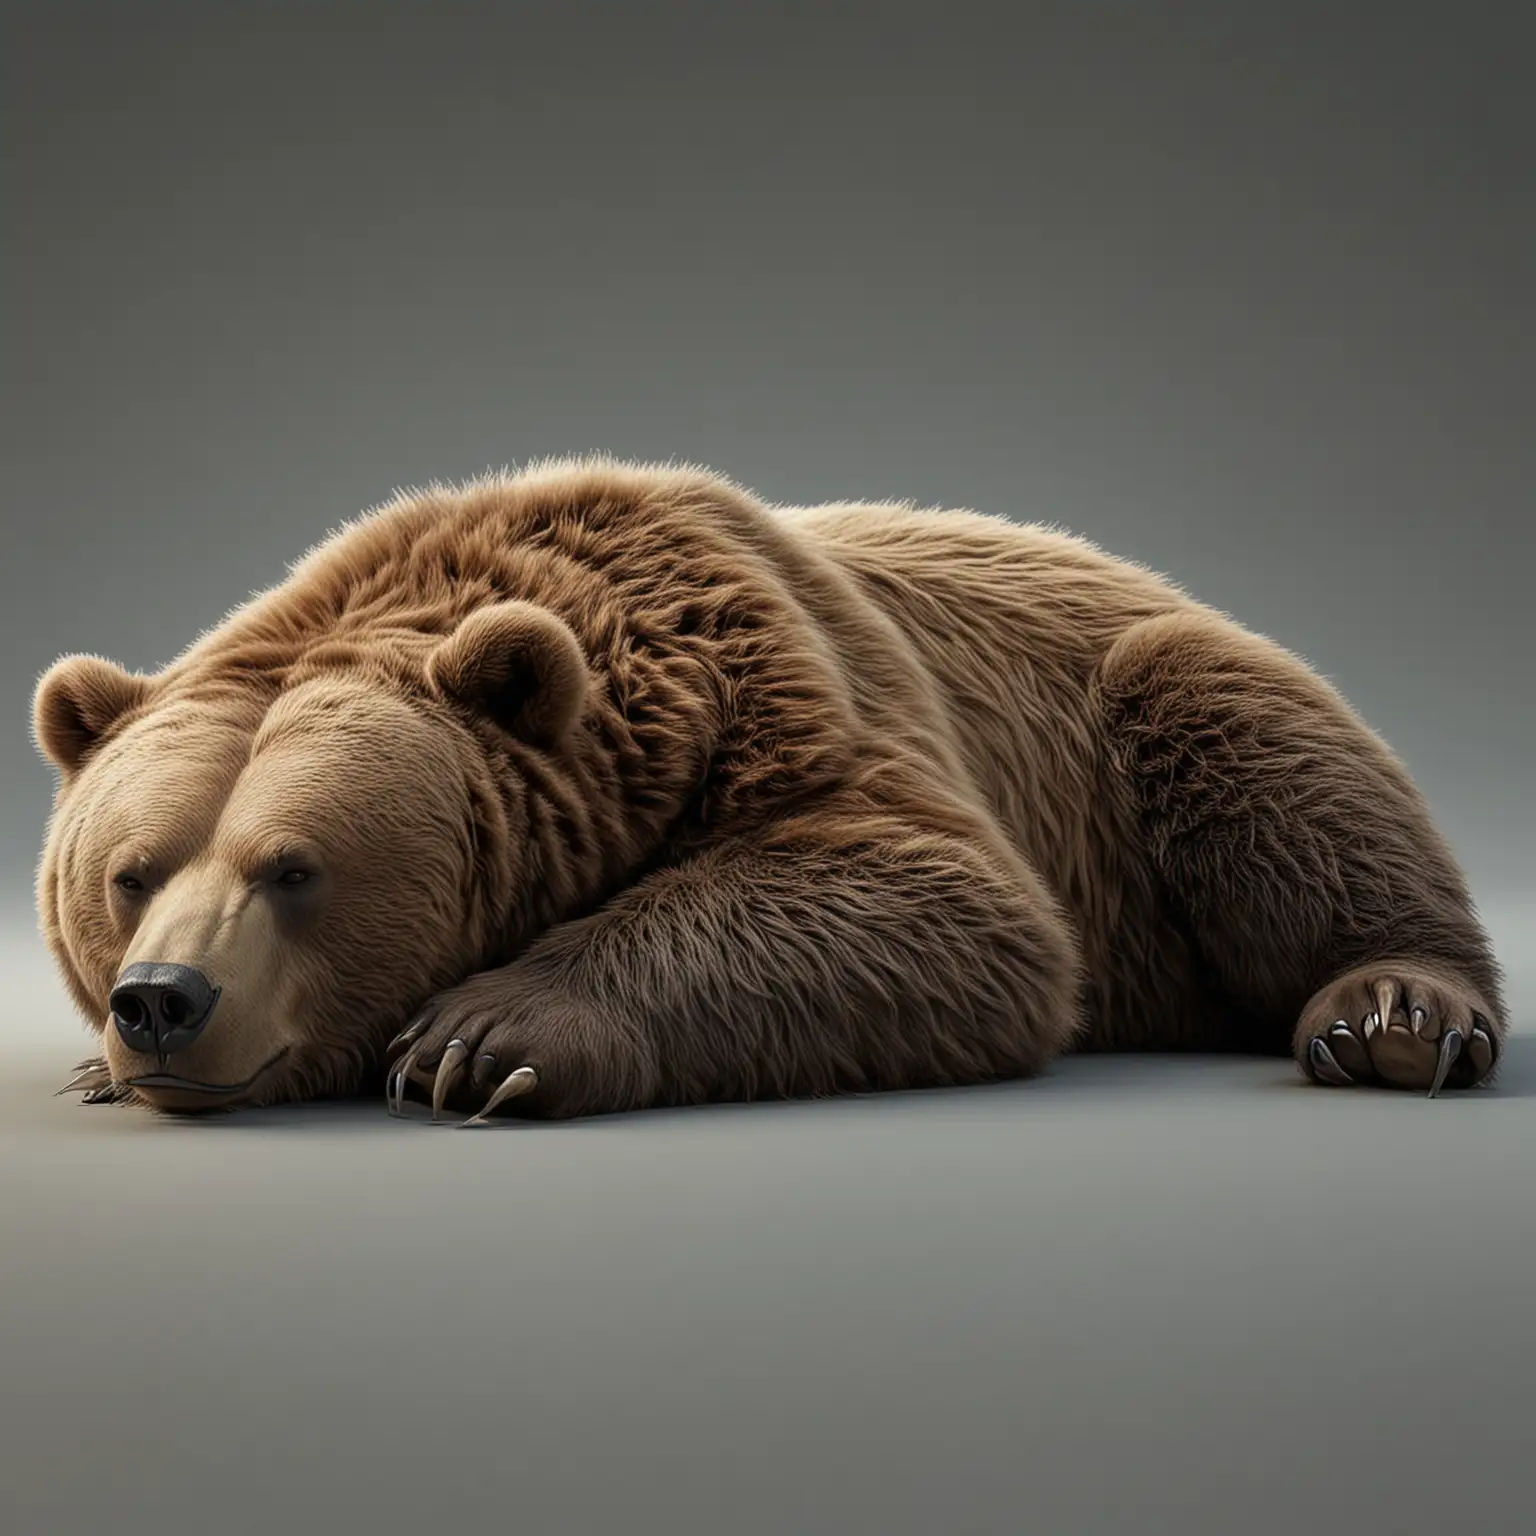 Realistic Powerful Bear Sleeping Prone